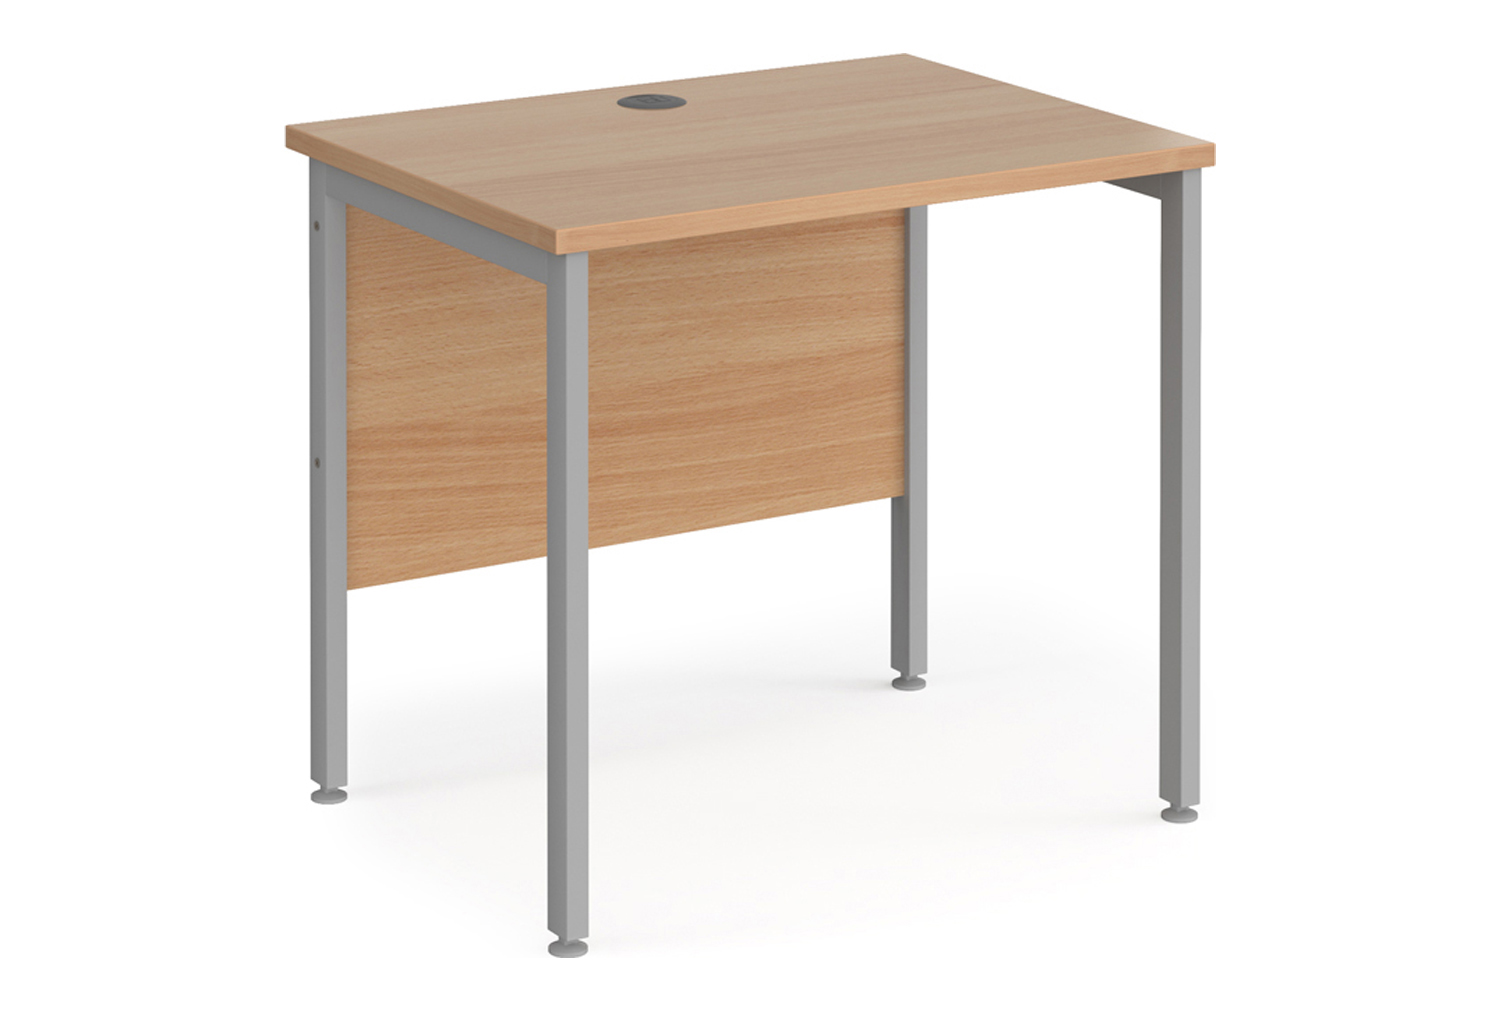 Value Line Deluxe H-Leg Narrow Rectangular Office Desk (Silver Legs), 80wx60dx73h (cm), Beech, Express Delivery